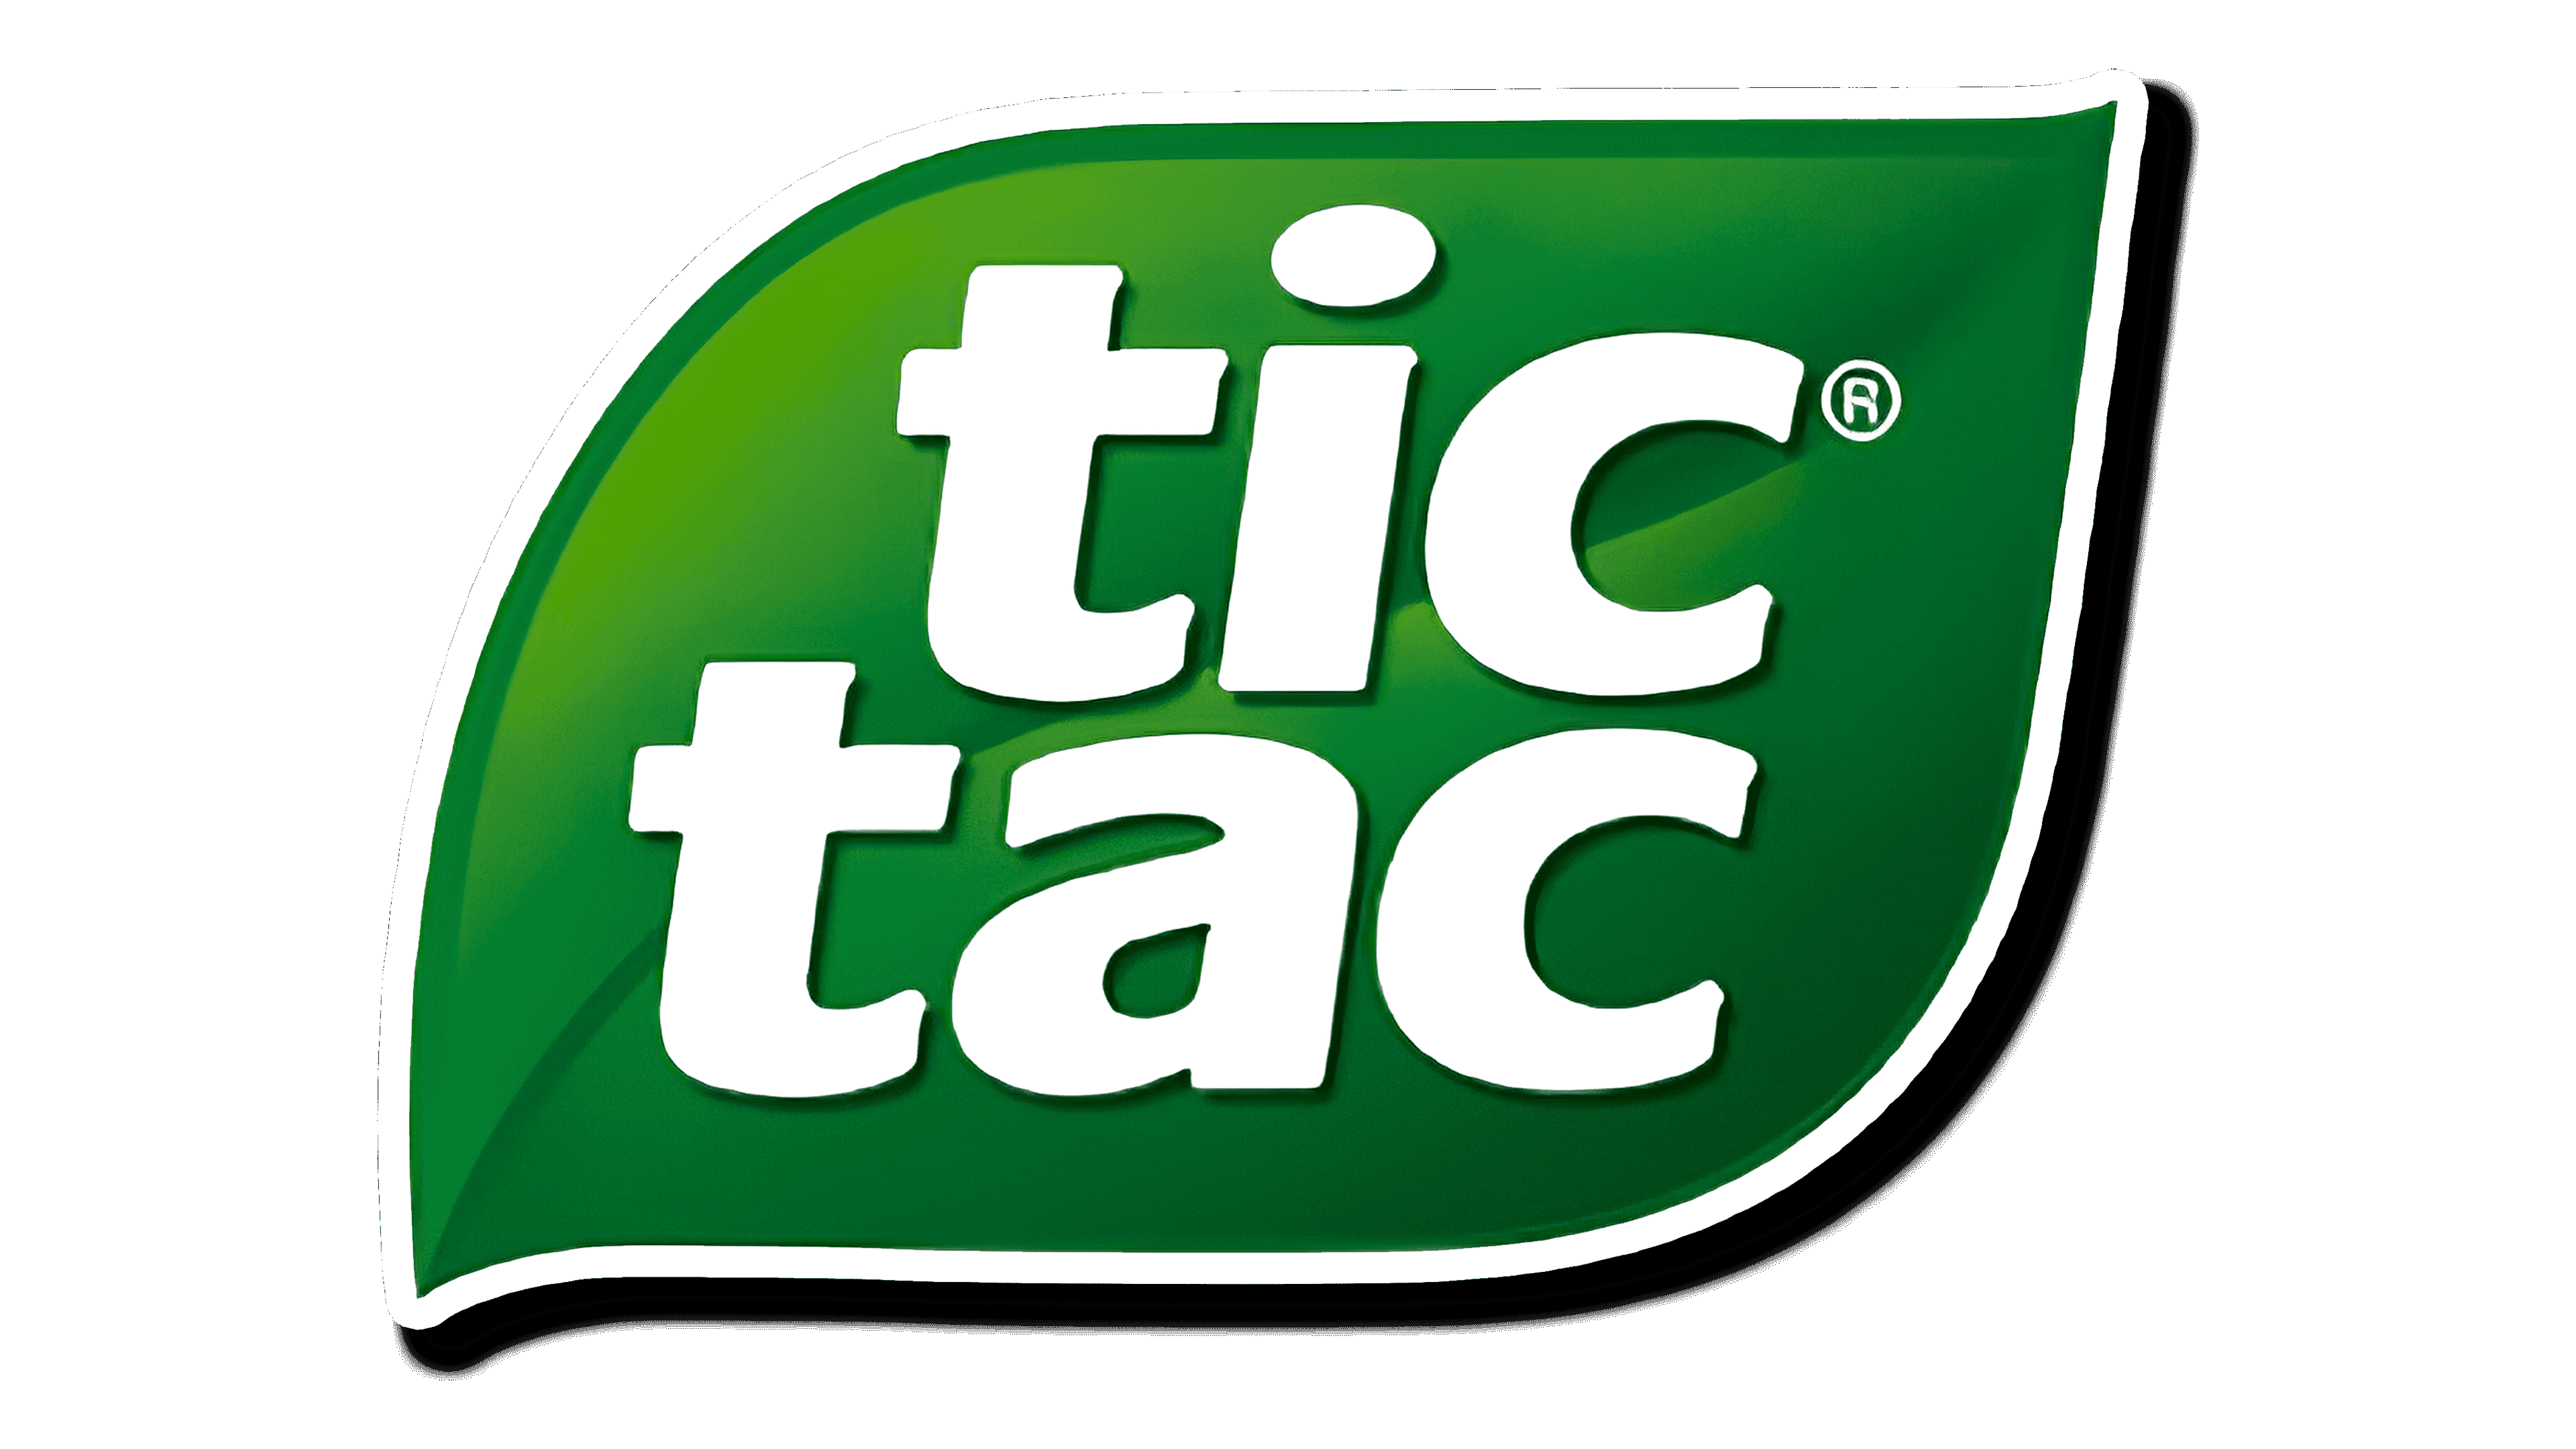 Tic Tac Toe Logo